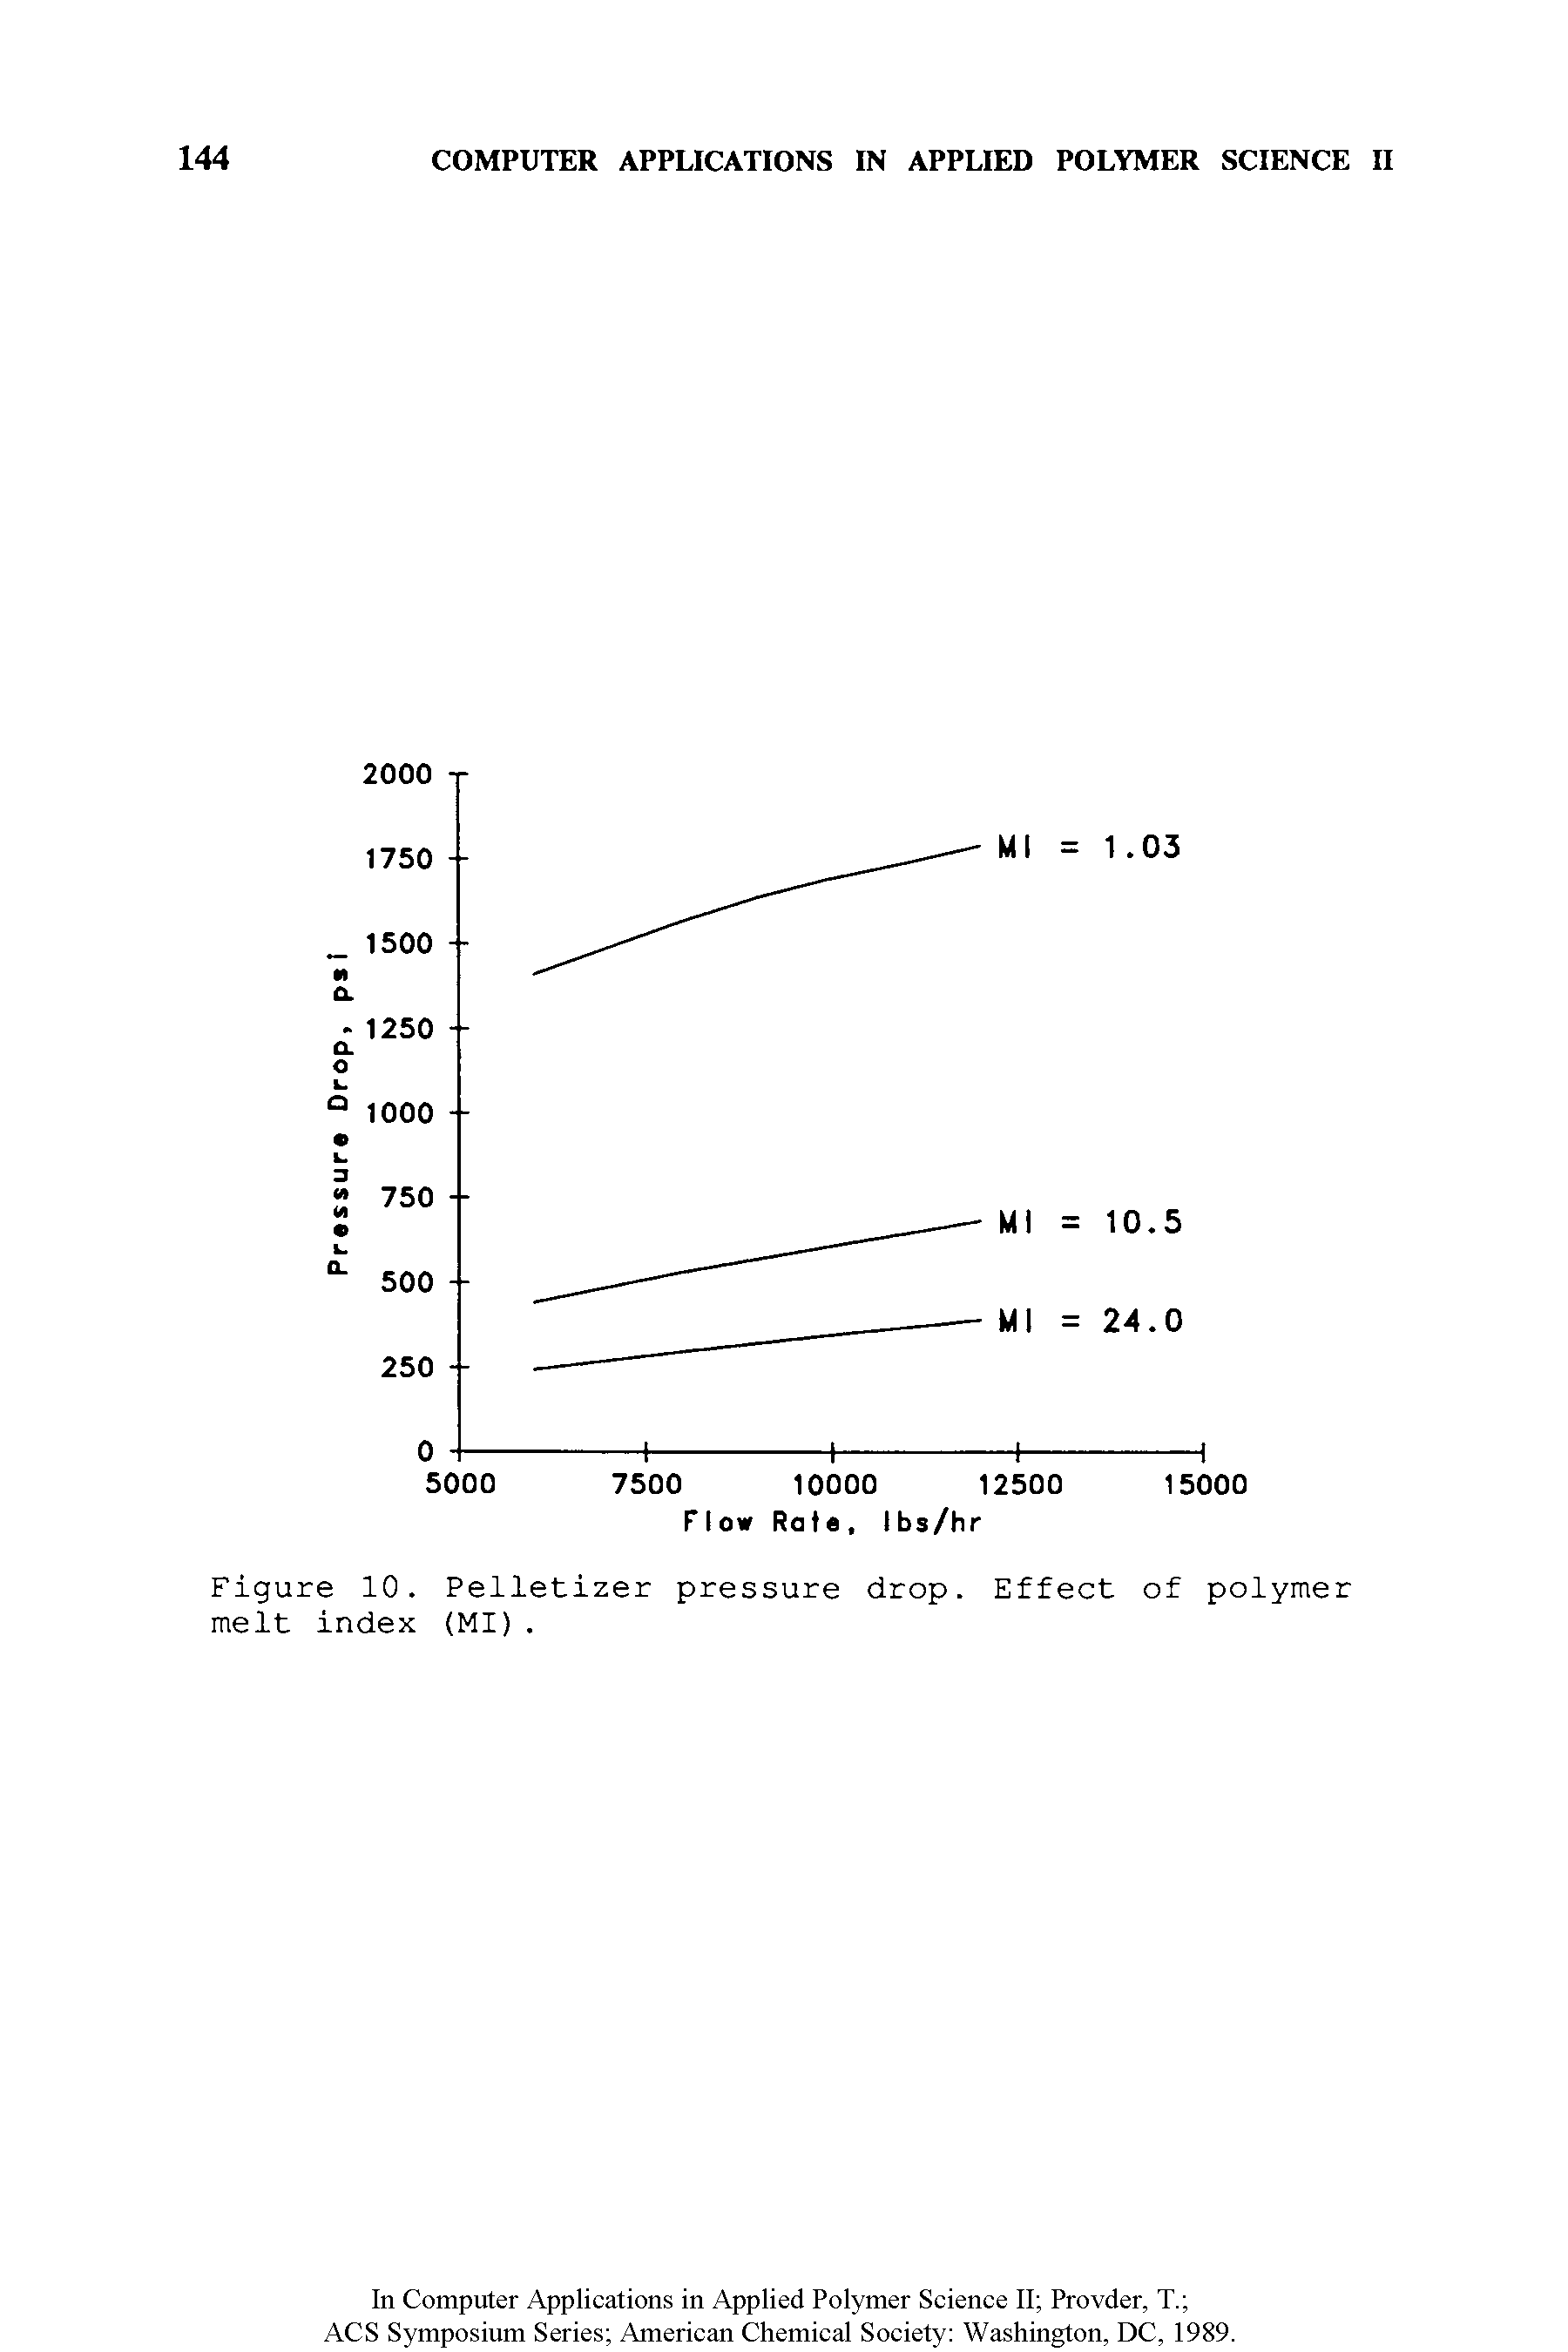 Figure 10. Pelletizer pressure drop. Effect of polymer melt index (MI).